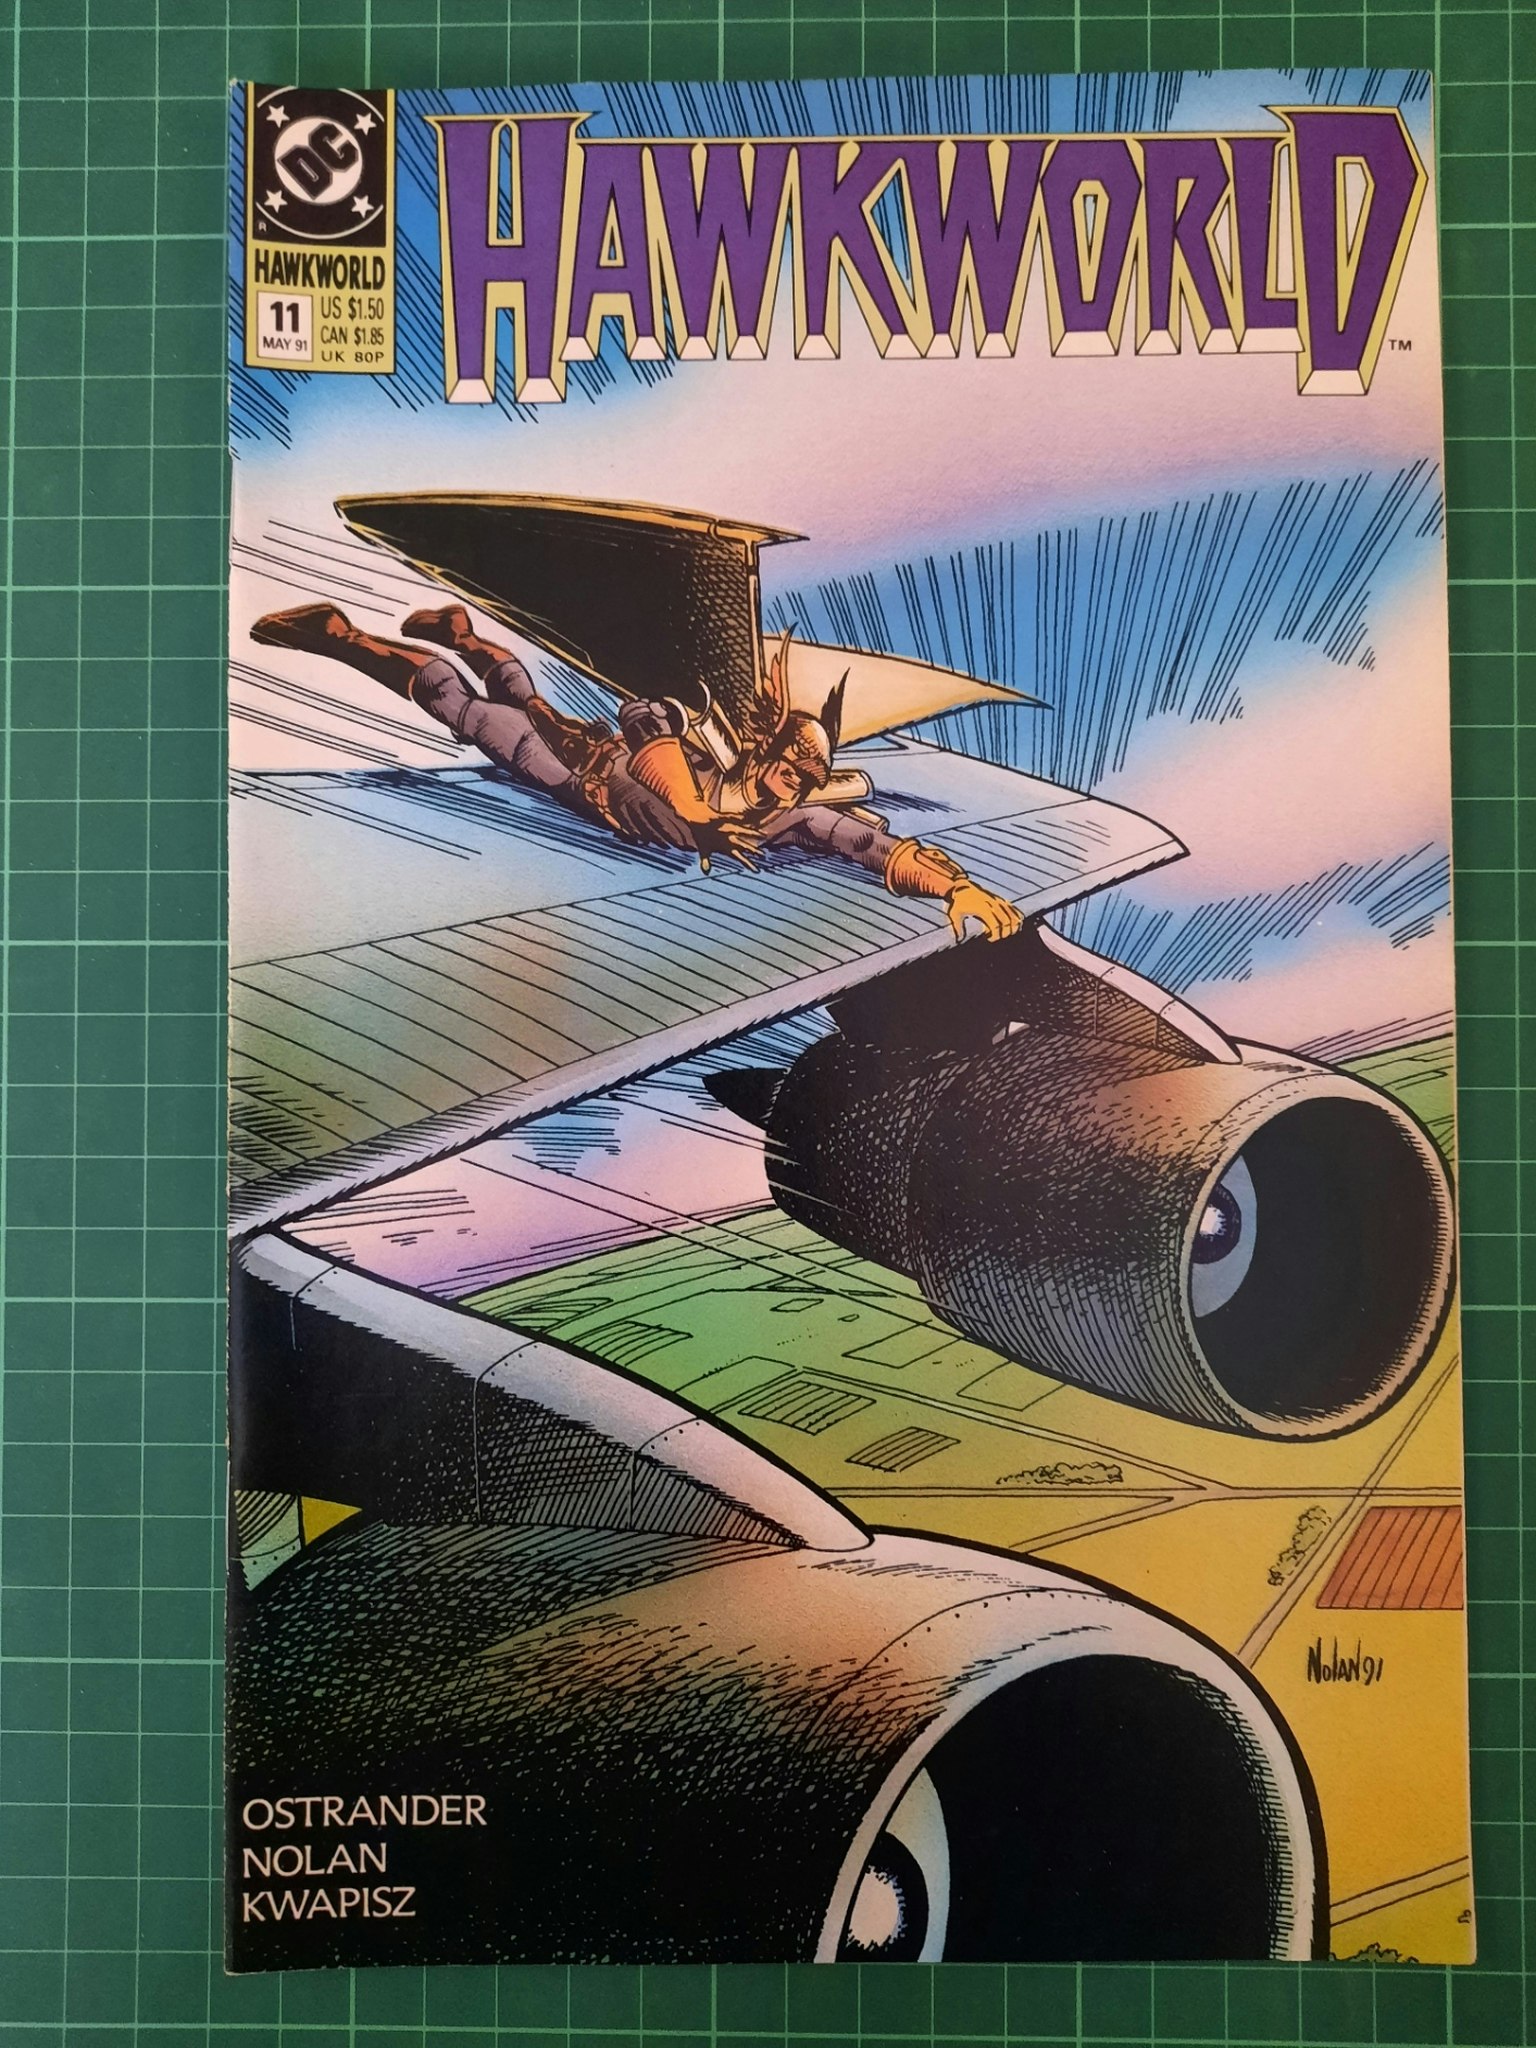 Hawkworld #11